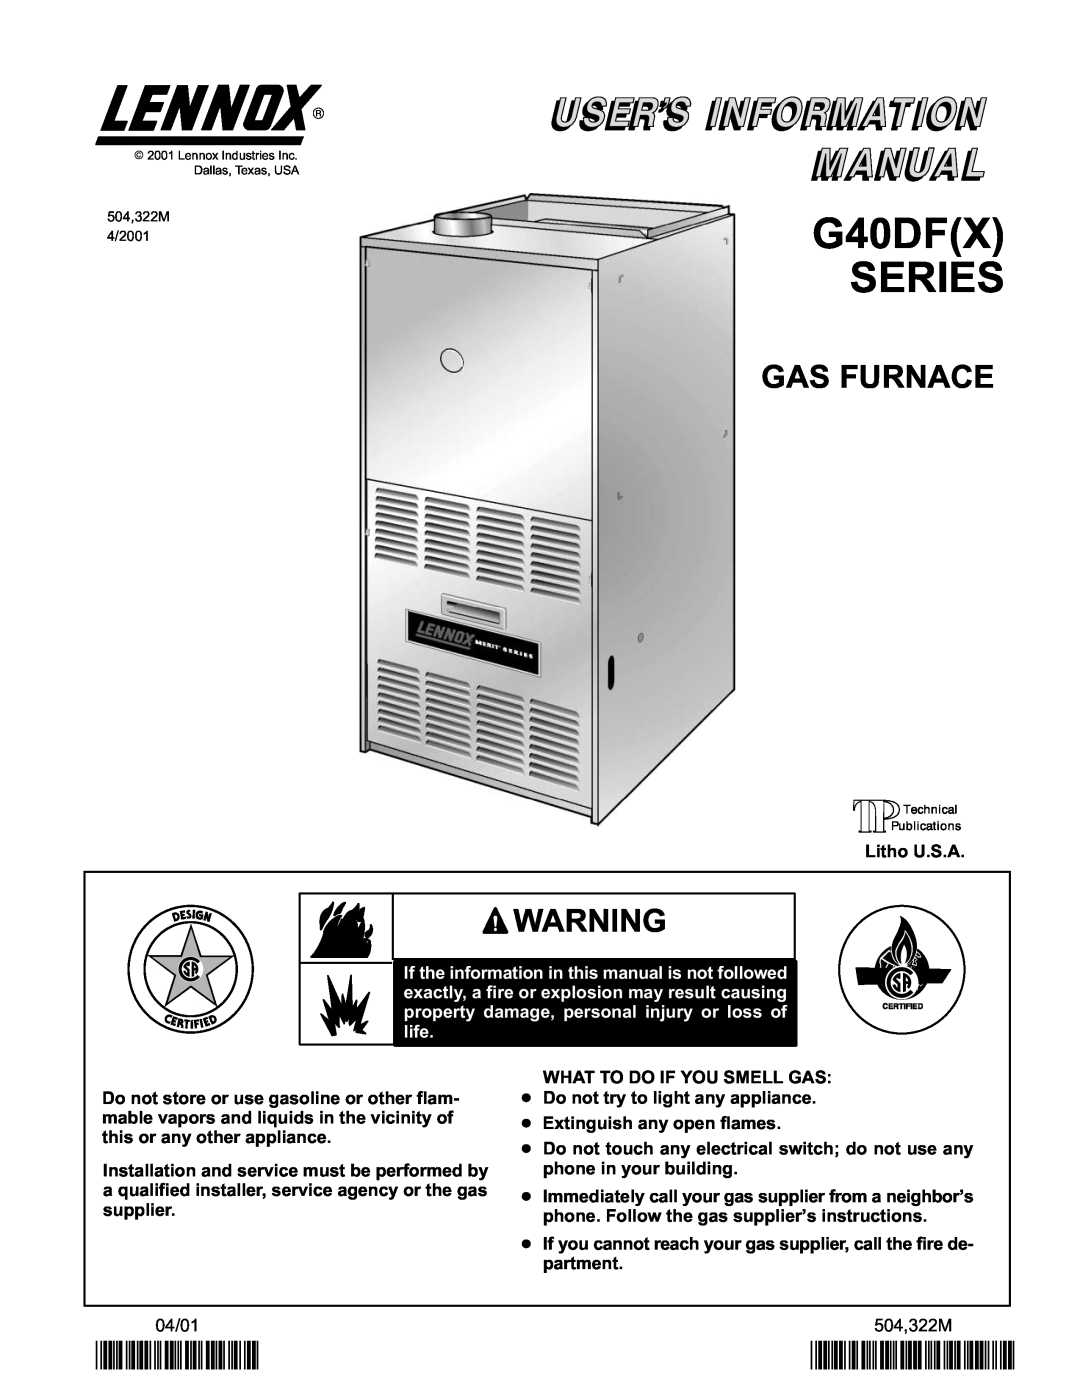 Lennox International Inc G40DF(X) SERIES manual G40DFX SERIES, Gas Furnace, 2P0401, P504322M 